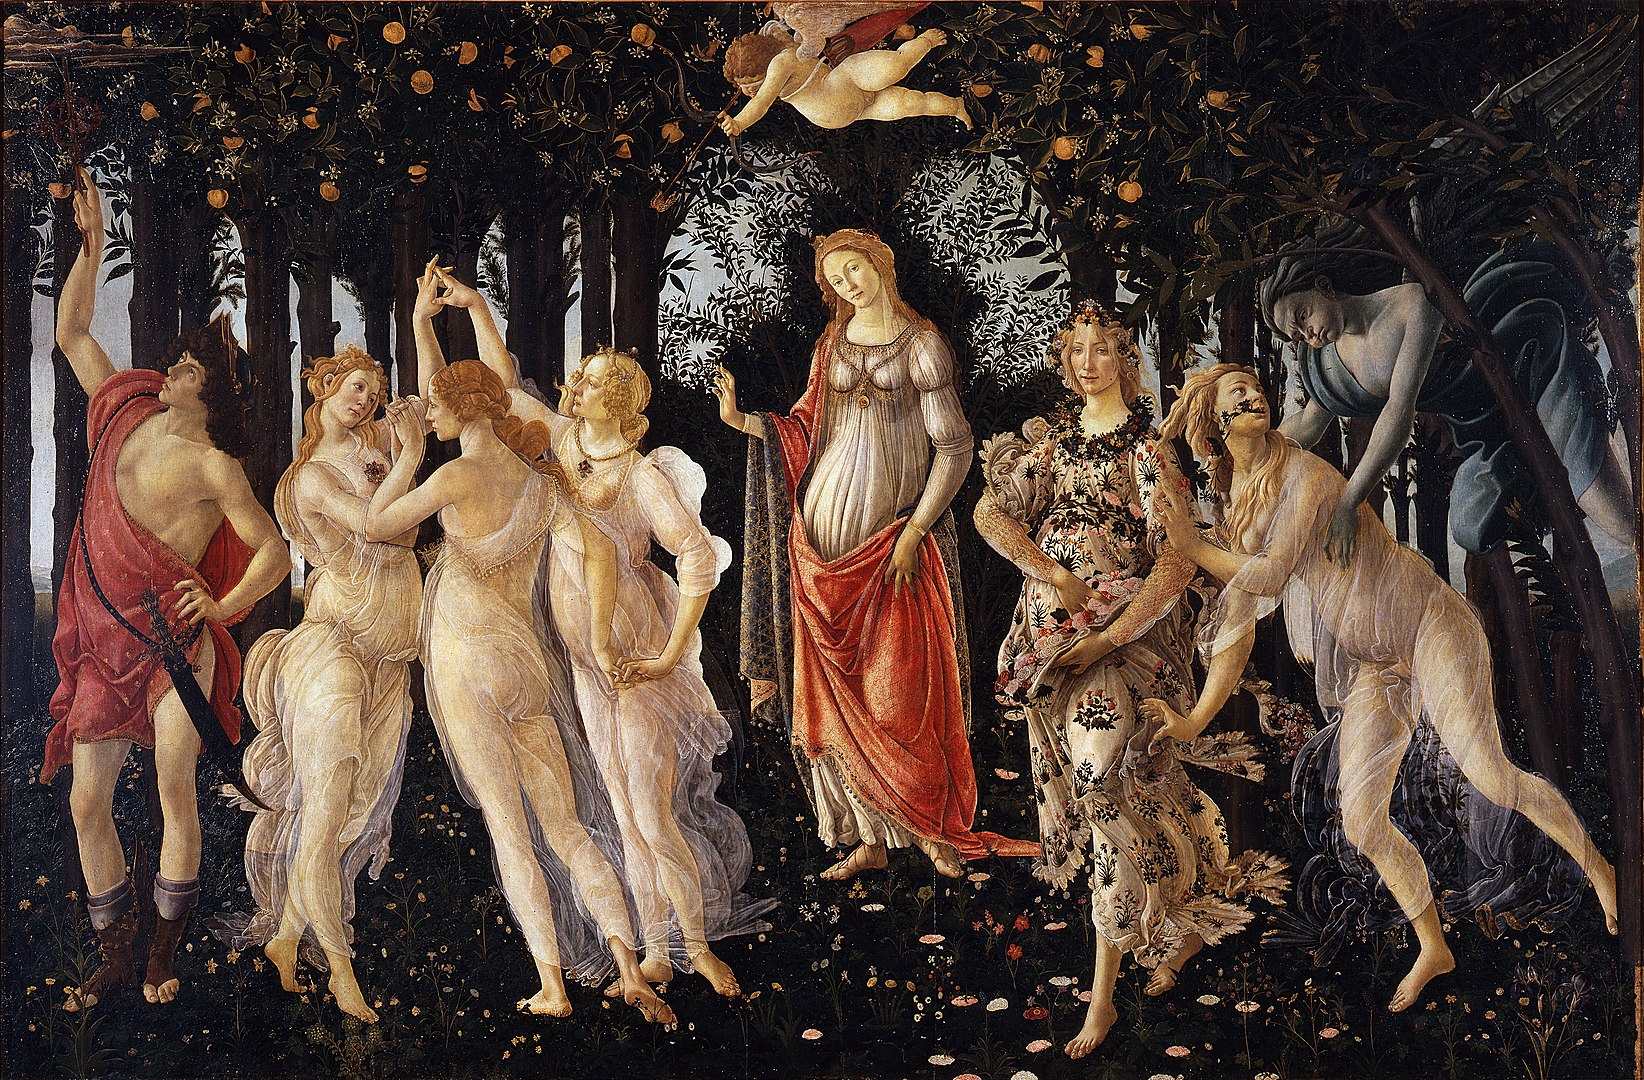 春 by Sandro Botticelli - 1477 年至 1482 年 - 203 x 314 釐米 